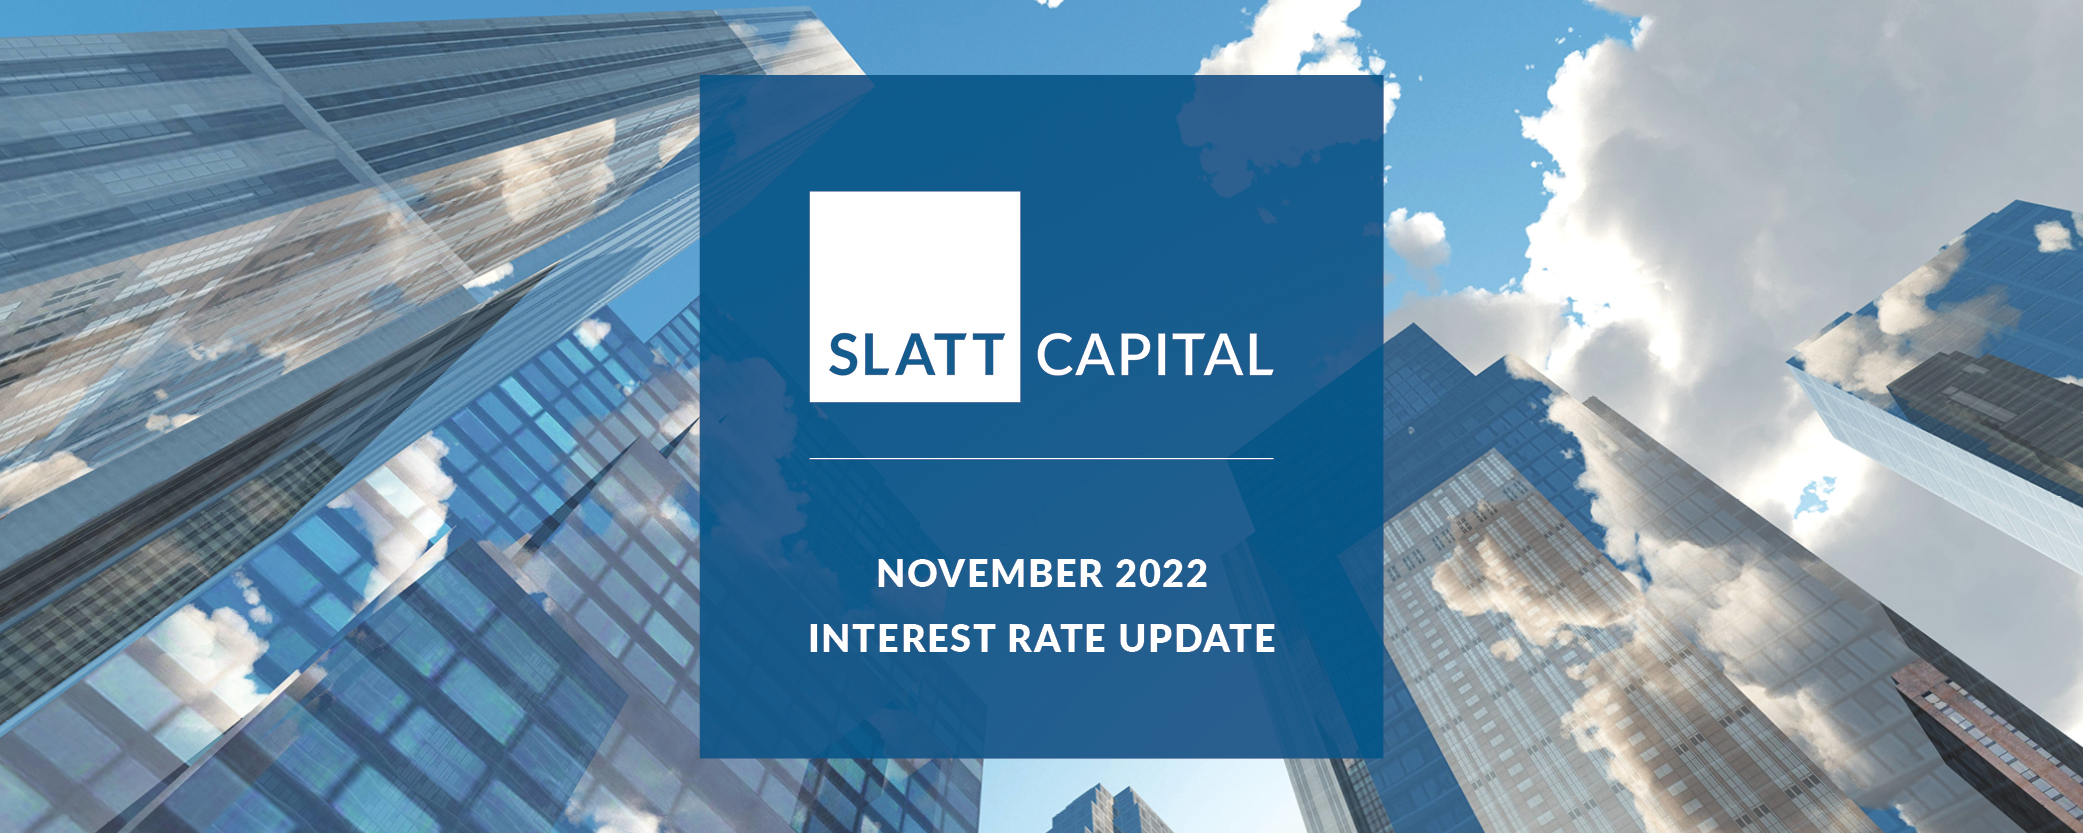 November 2022 interest rate update